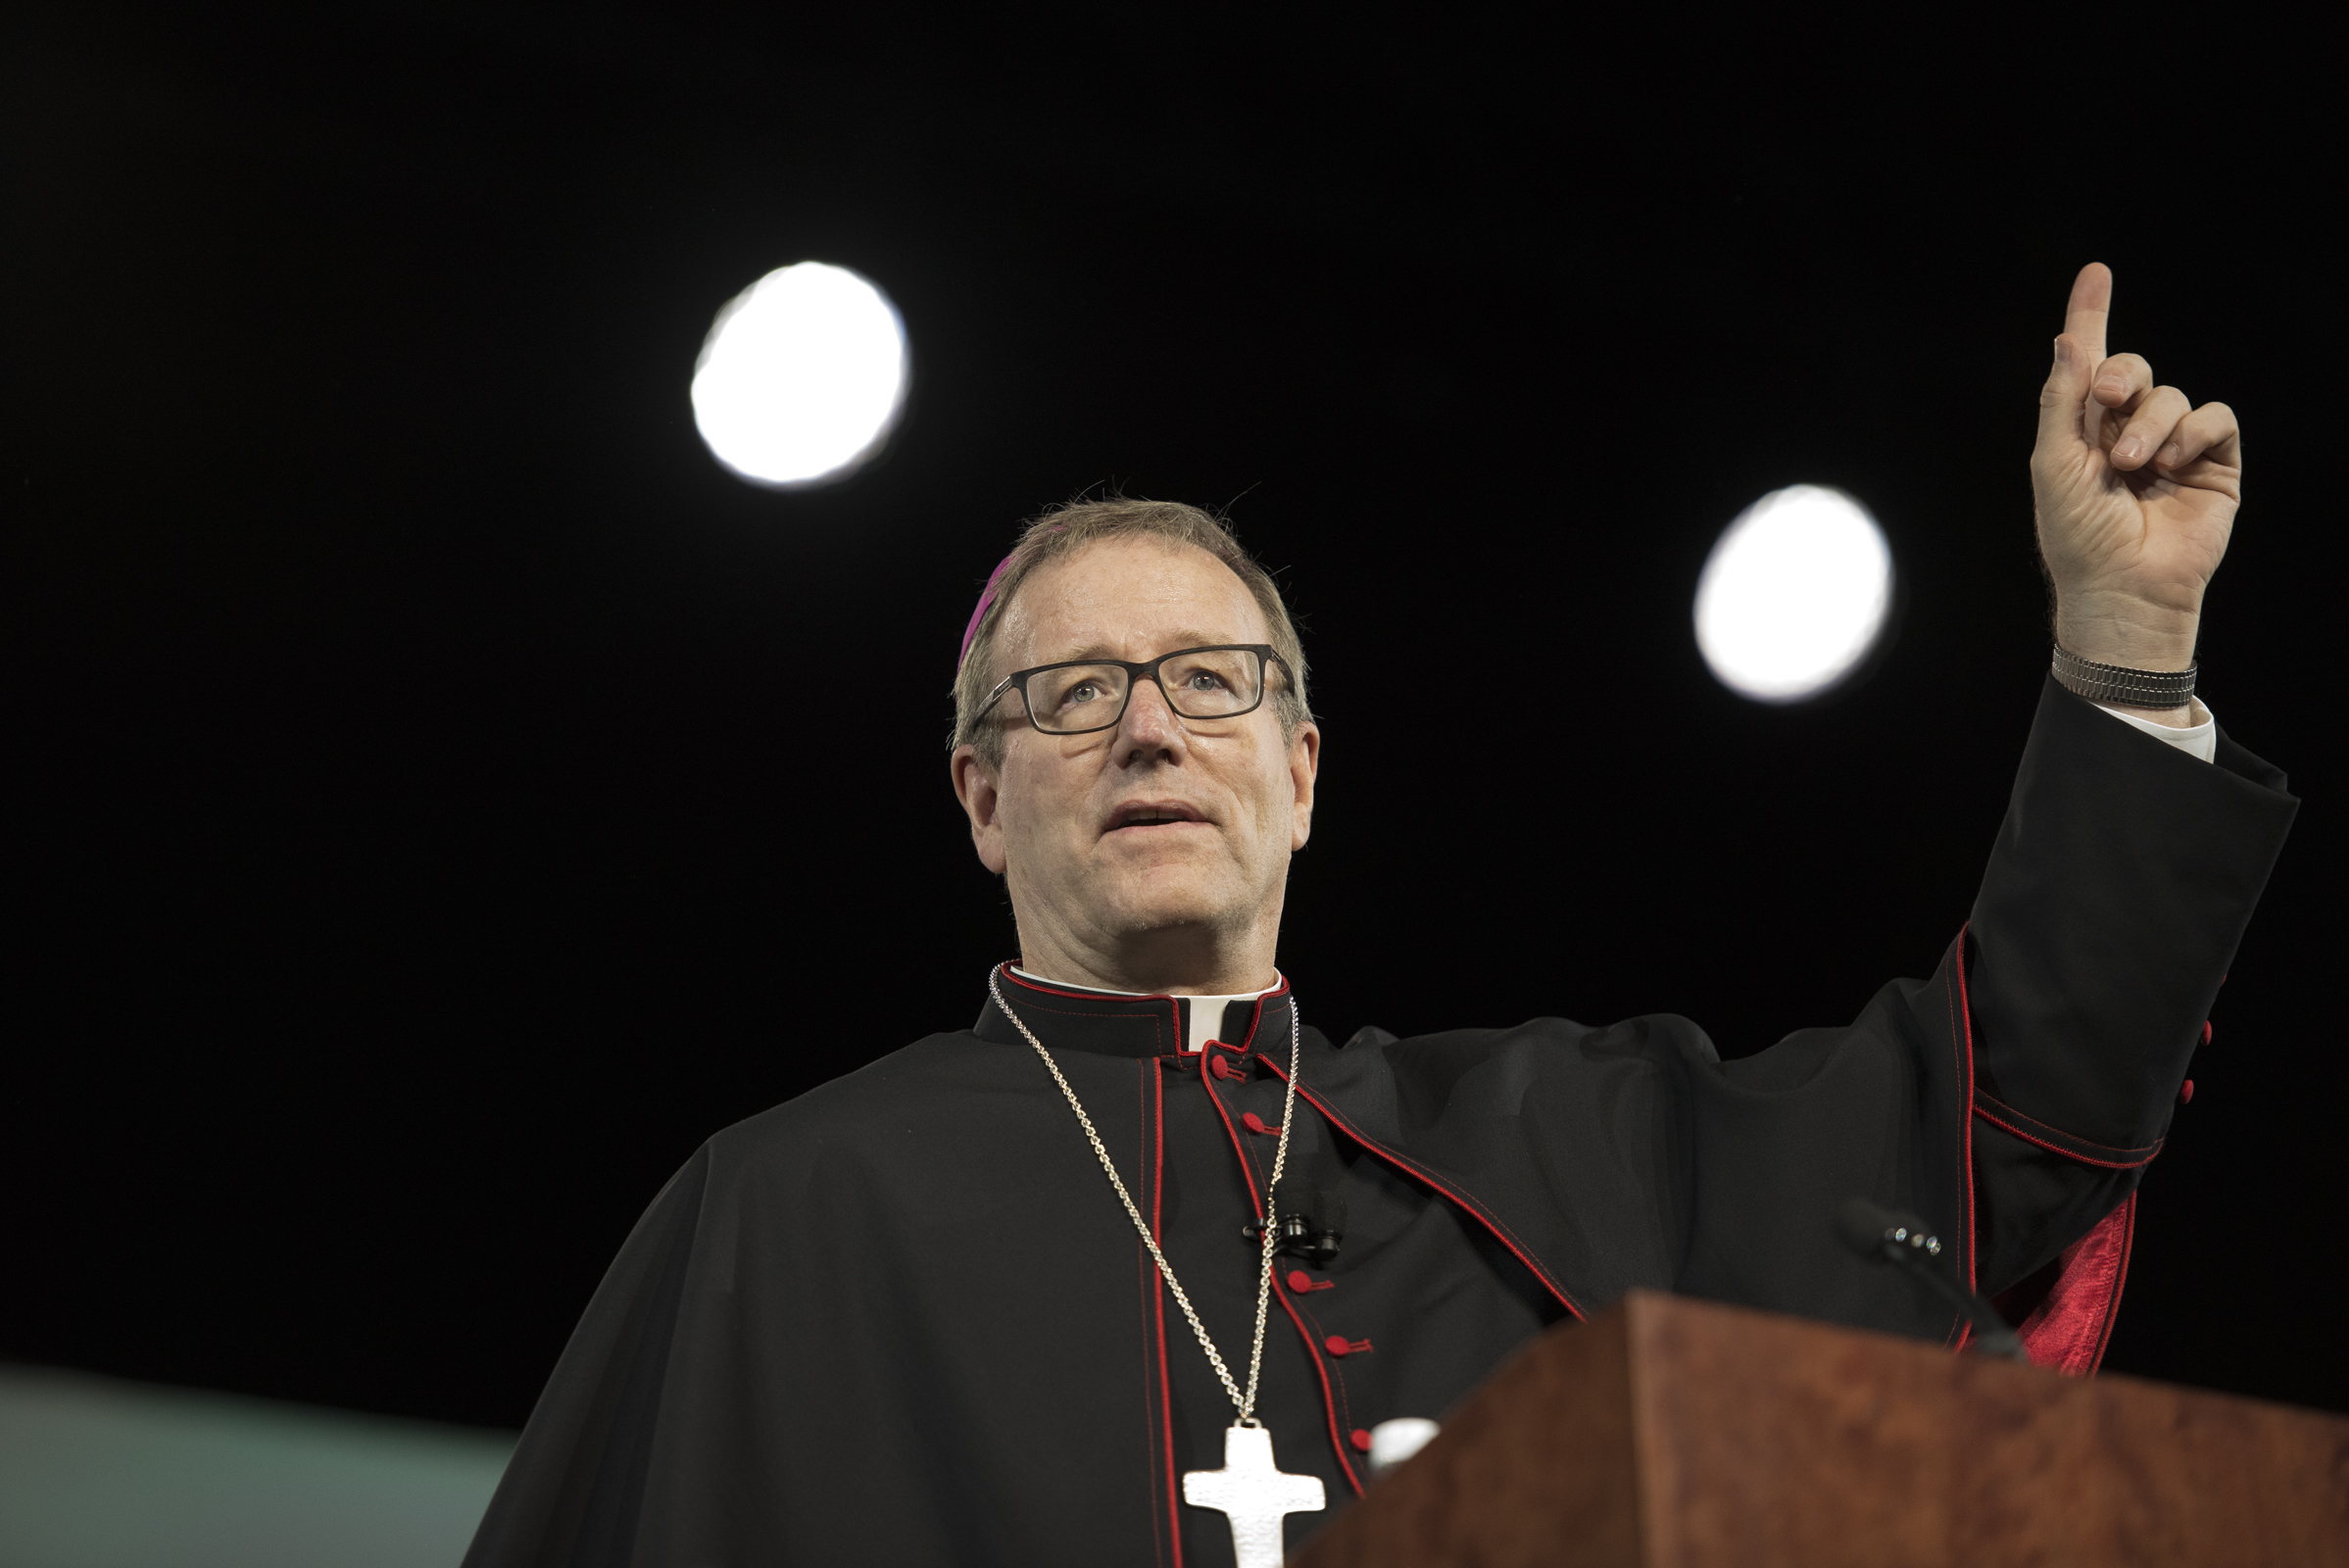 'Demonic and diabolical': Bishop Barron on the sex abuse crisis